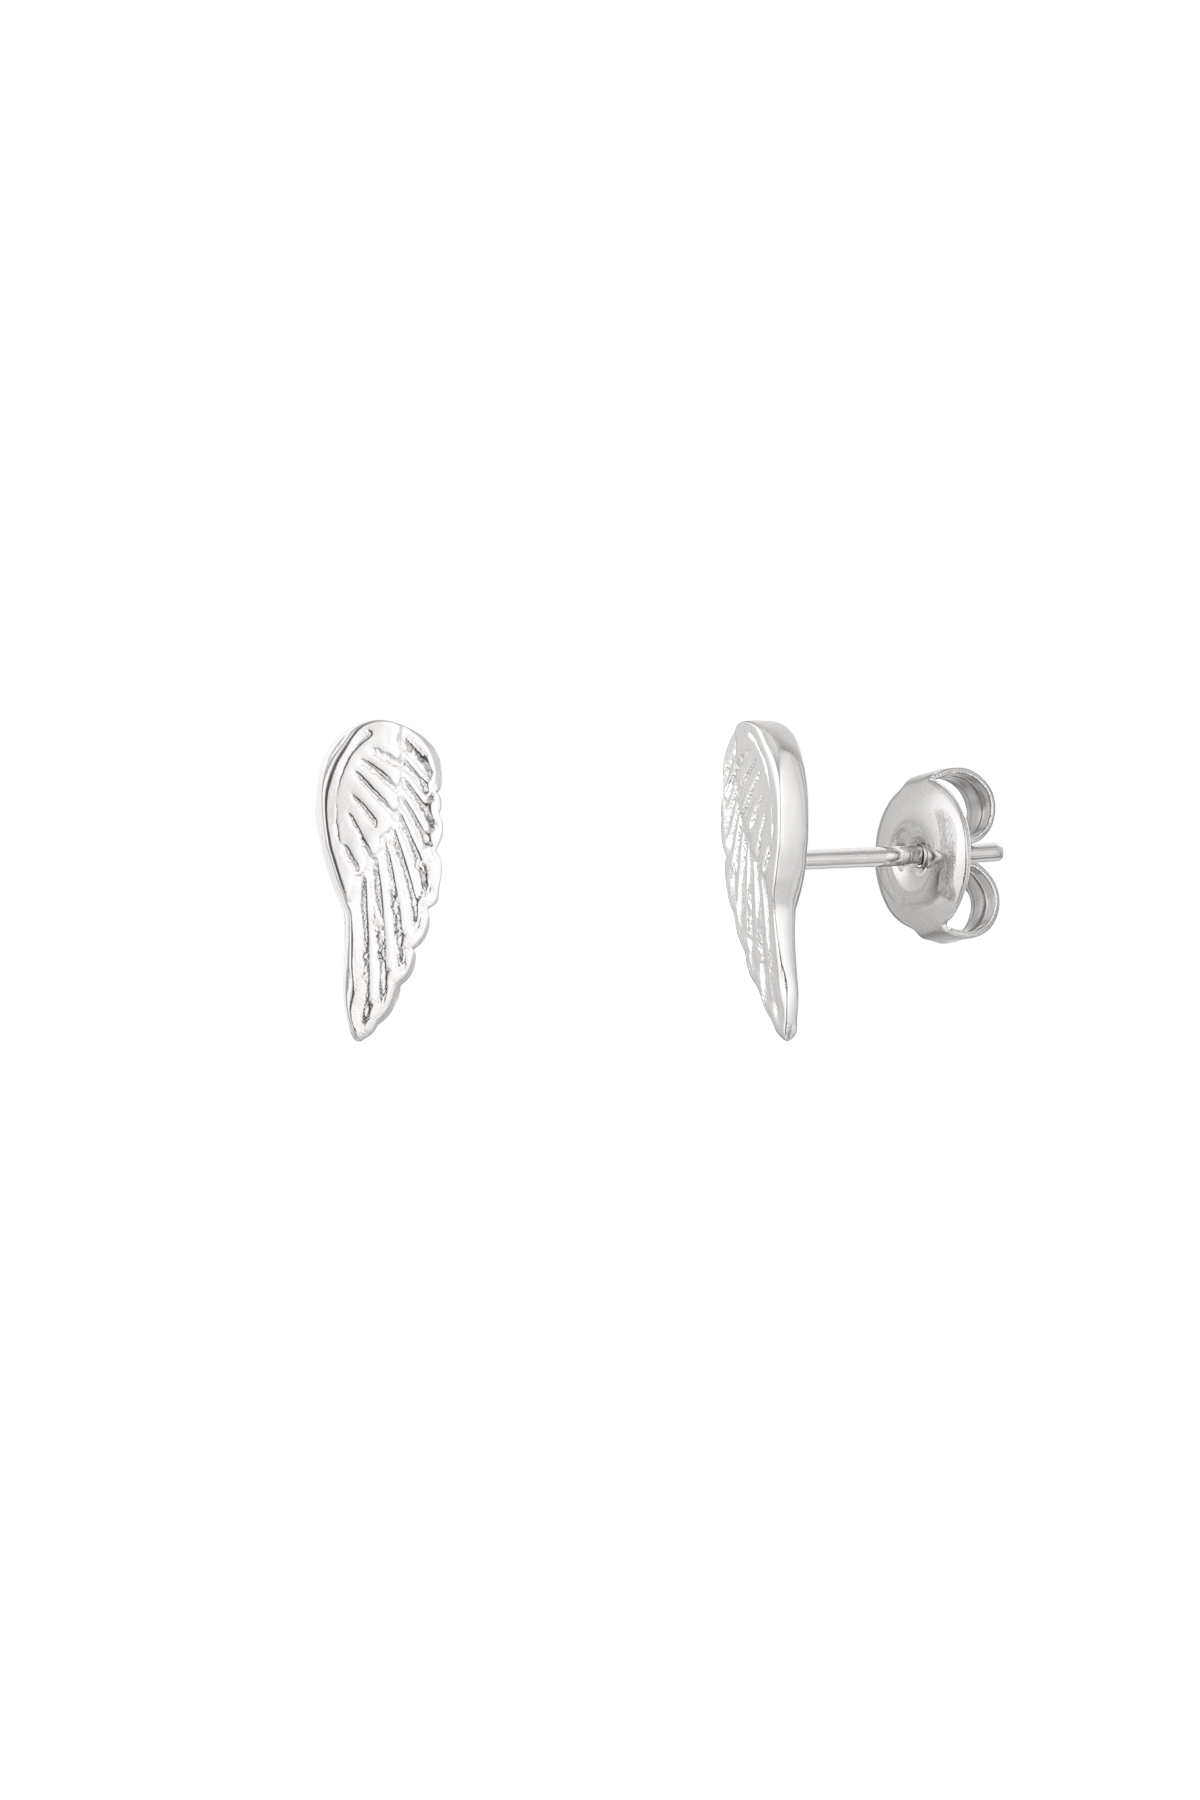 Wing stud earrings - silver Stainless Steel 